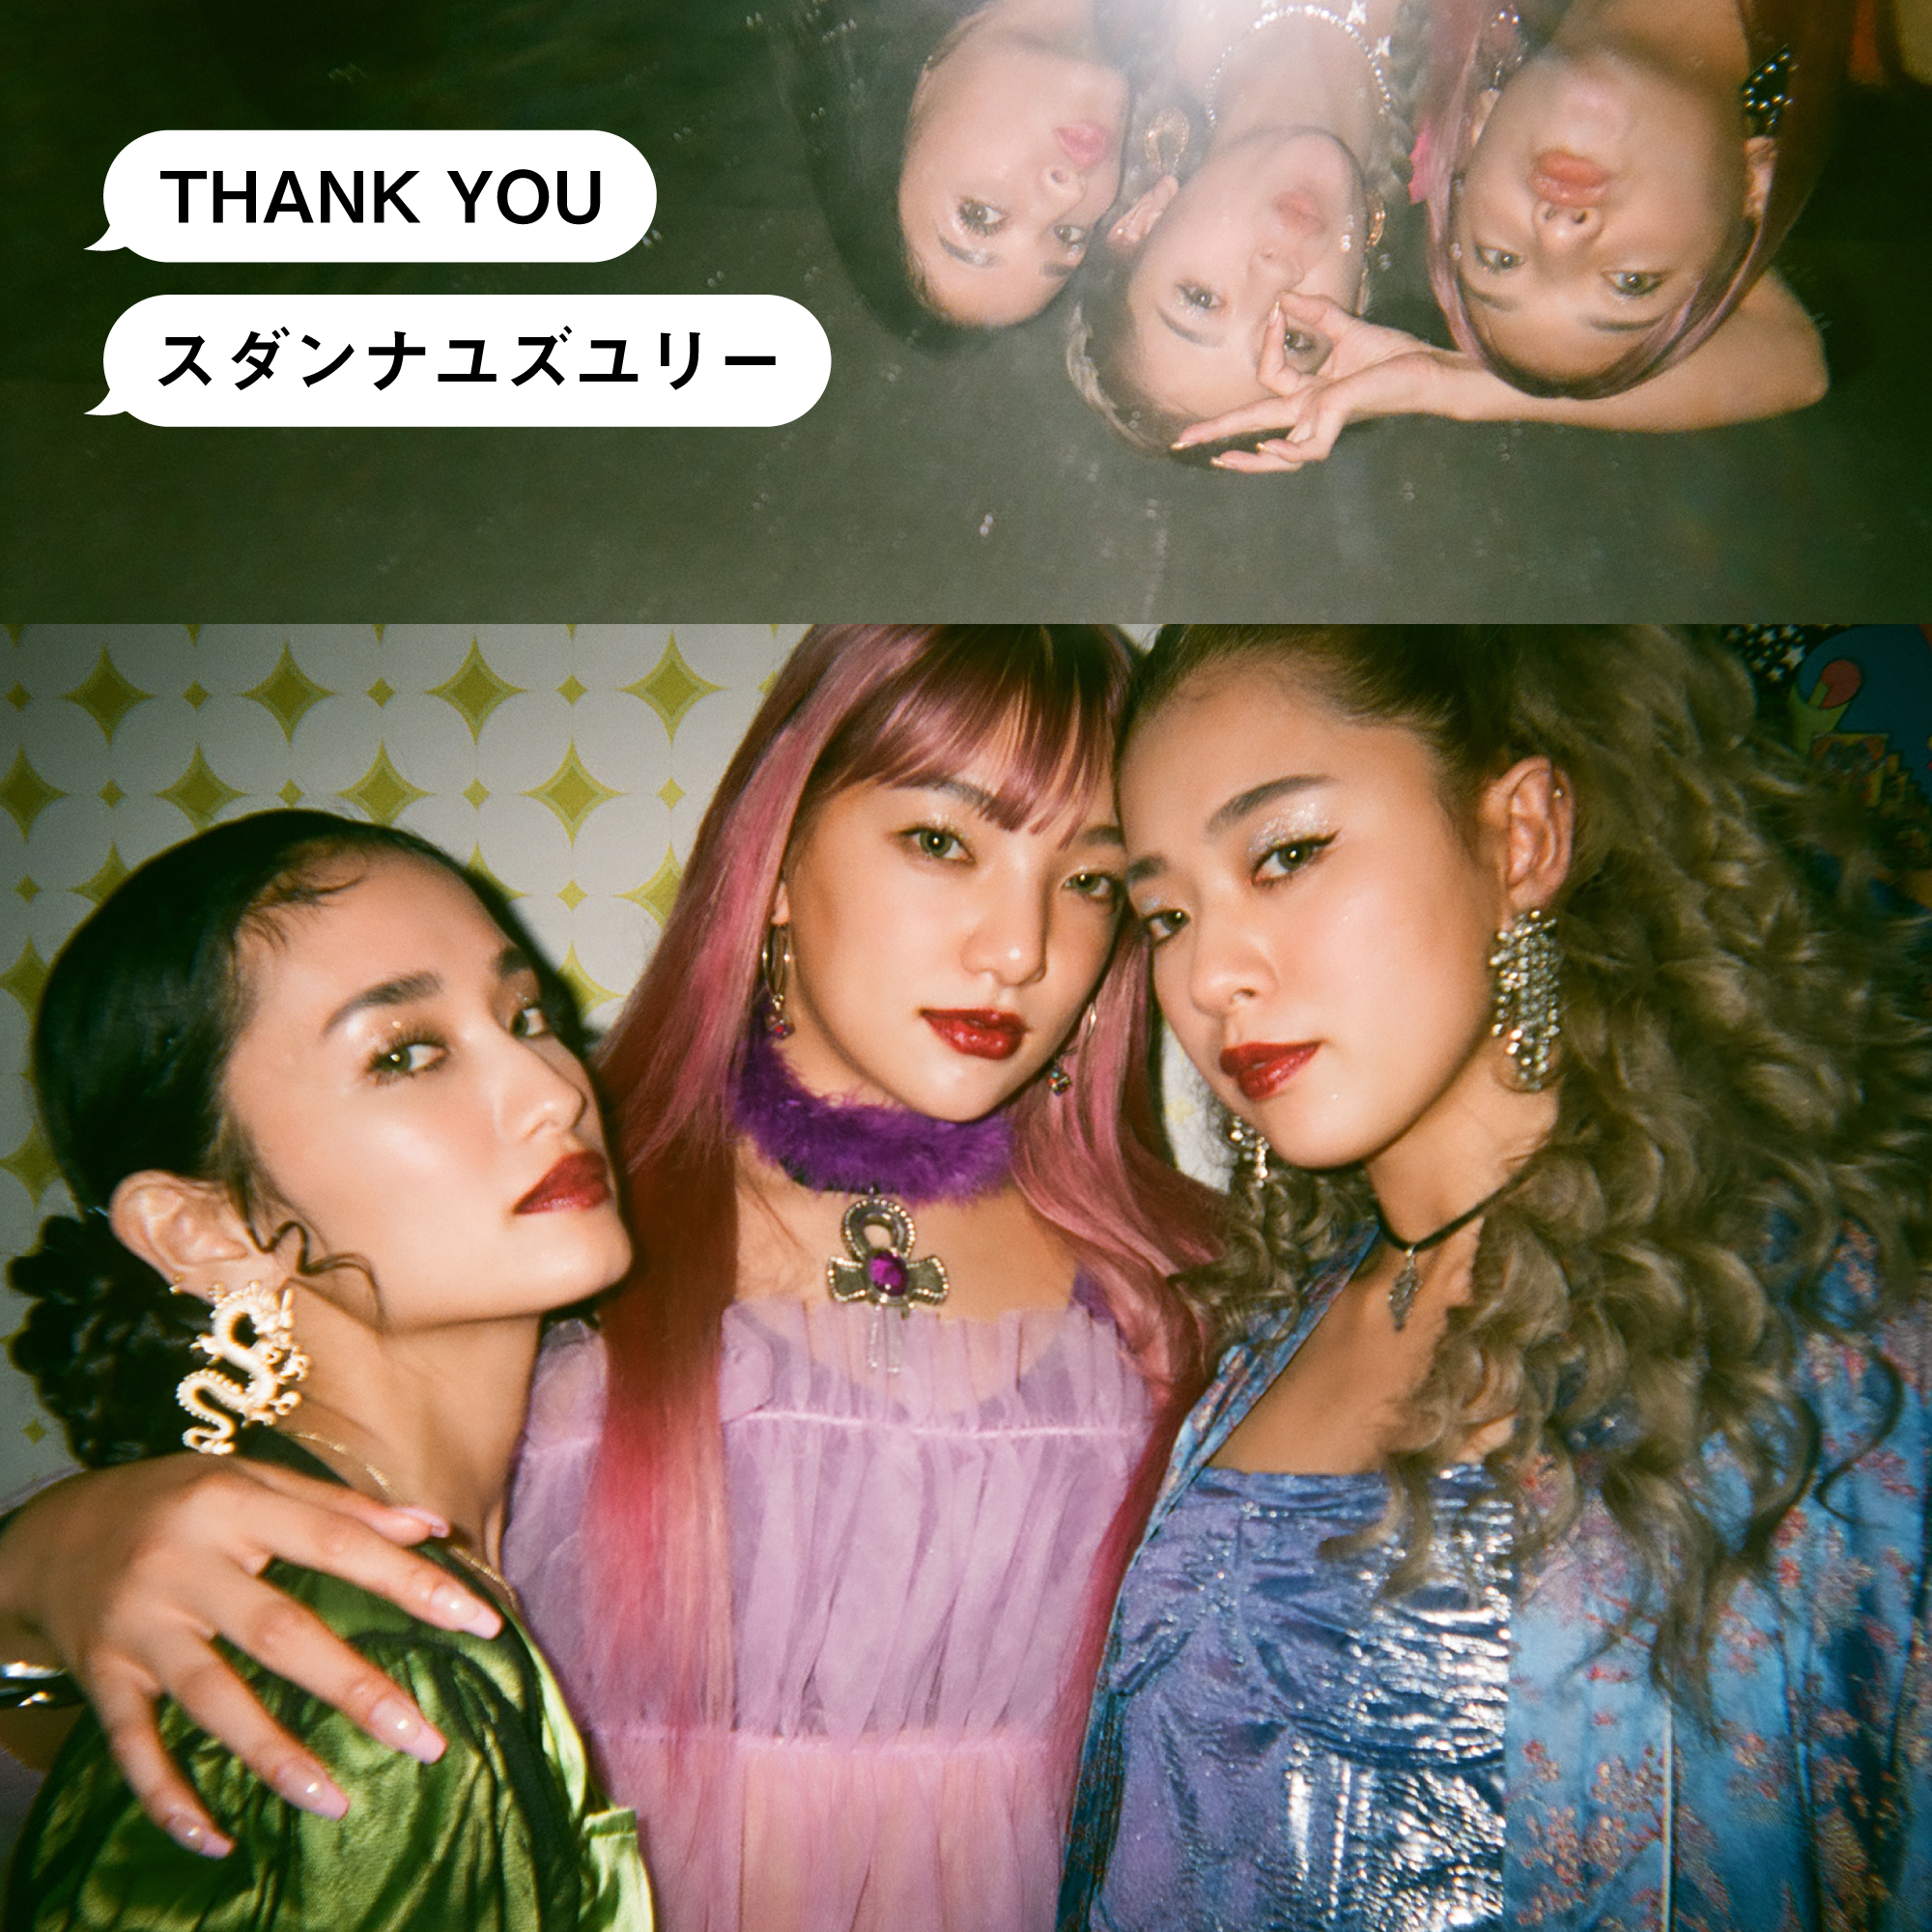 Complete Album 「THANK YOU」AL+DVD(スマプラ対応)

